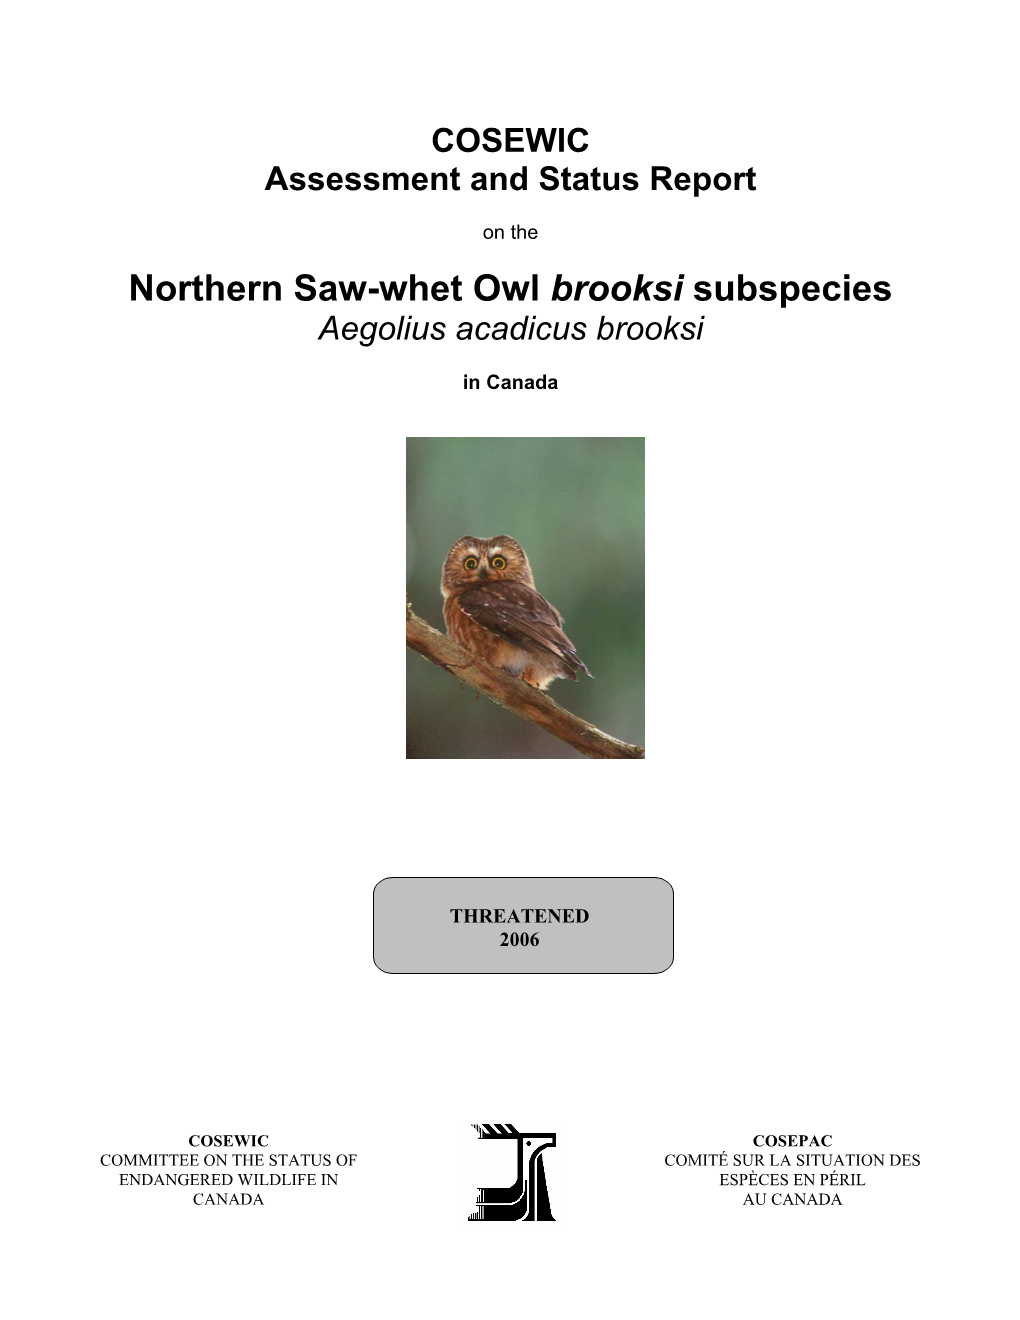 Northern Saw-Whet Owl (Aegolius Acadicus Brooksi)